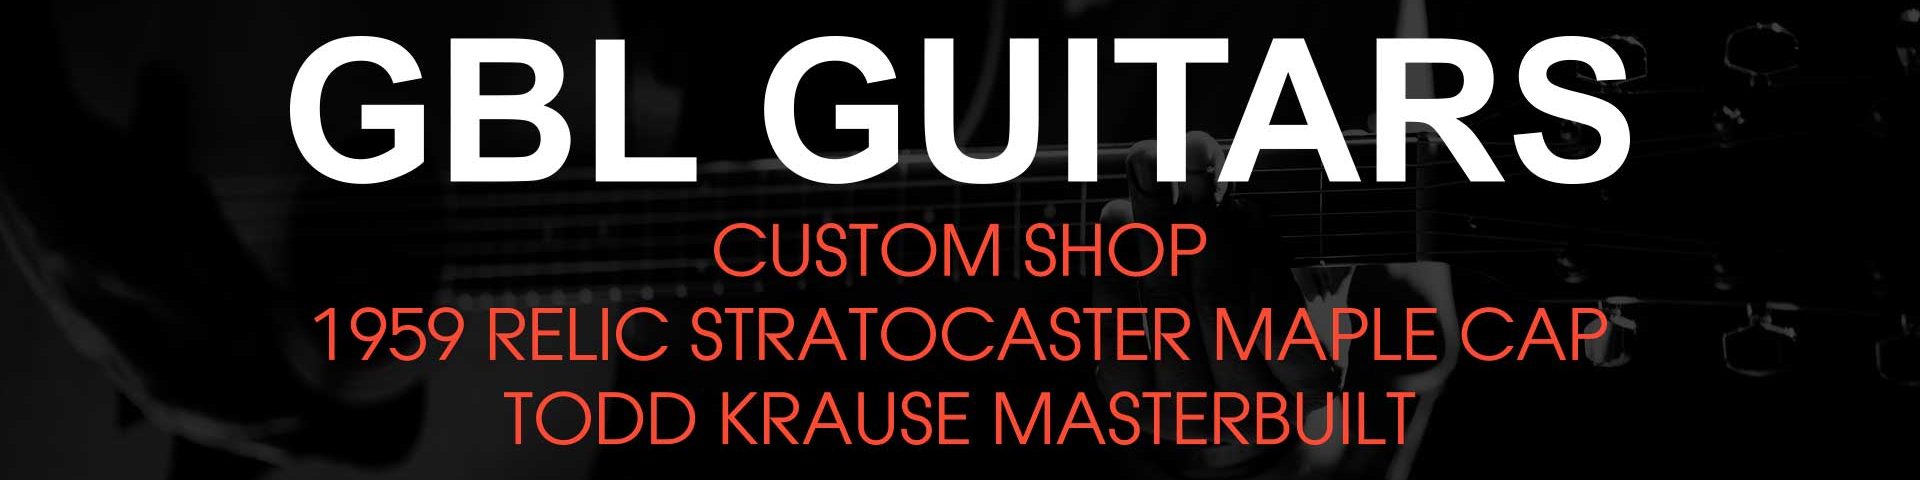 1959 relic stratocaster maple cap todd krause masterbuilt